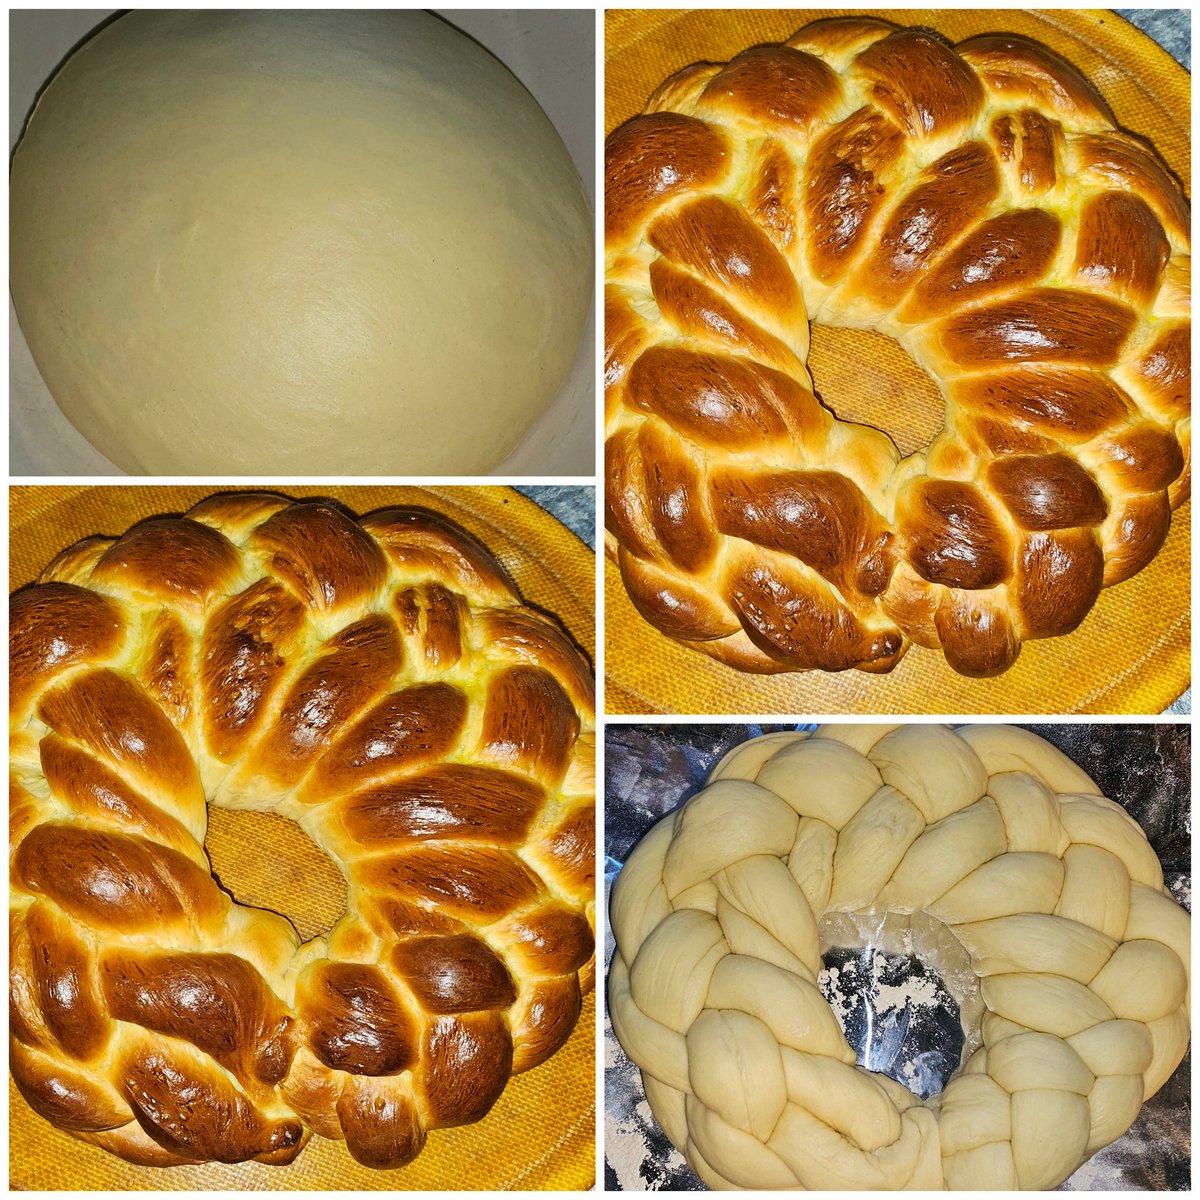 My practice brioche bread wreath for Thanksgiving.  Whatcha think? 
#AzrielsAcres 
#ArtisanBread 
#FoodDork